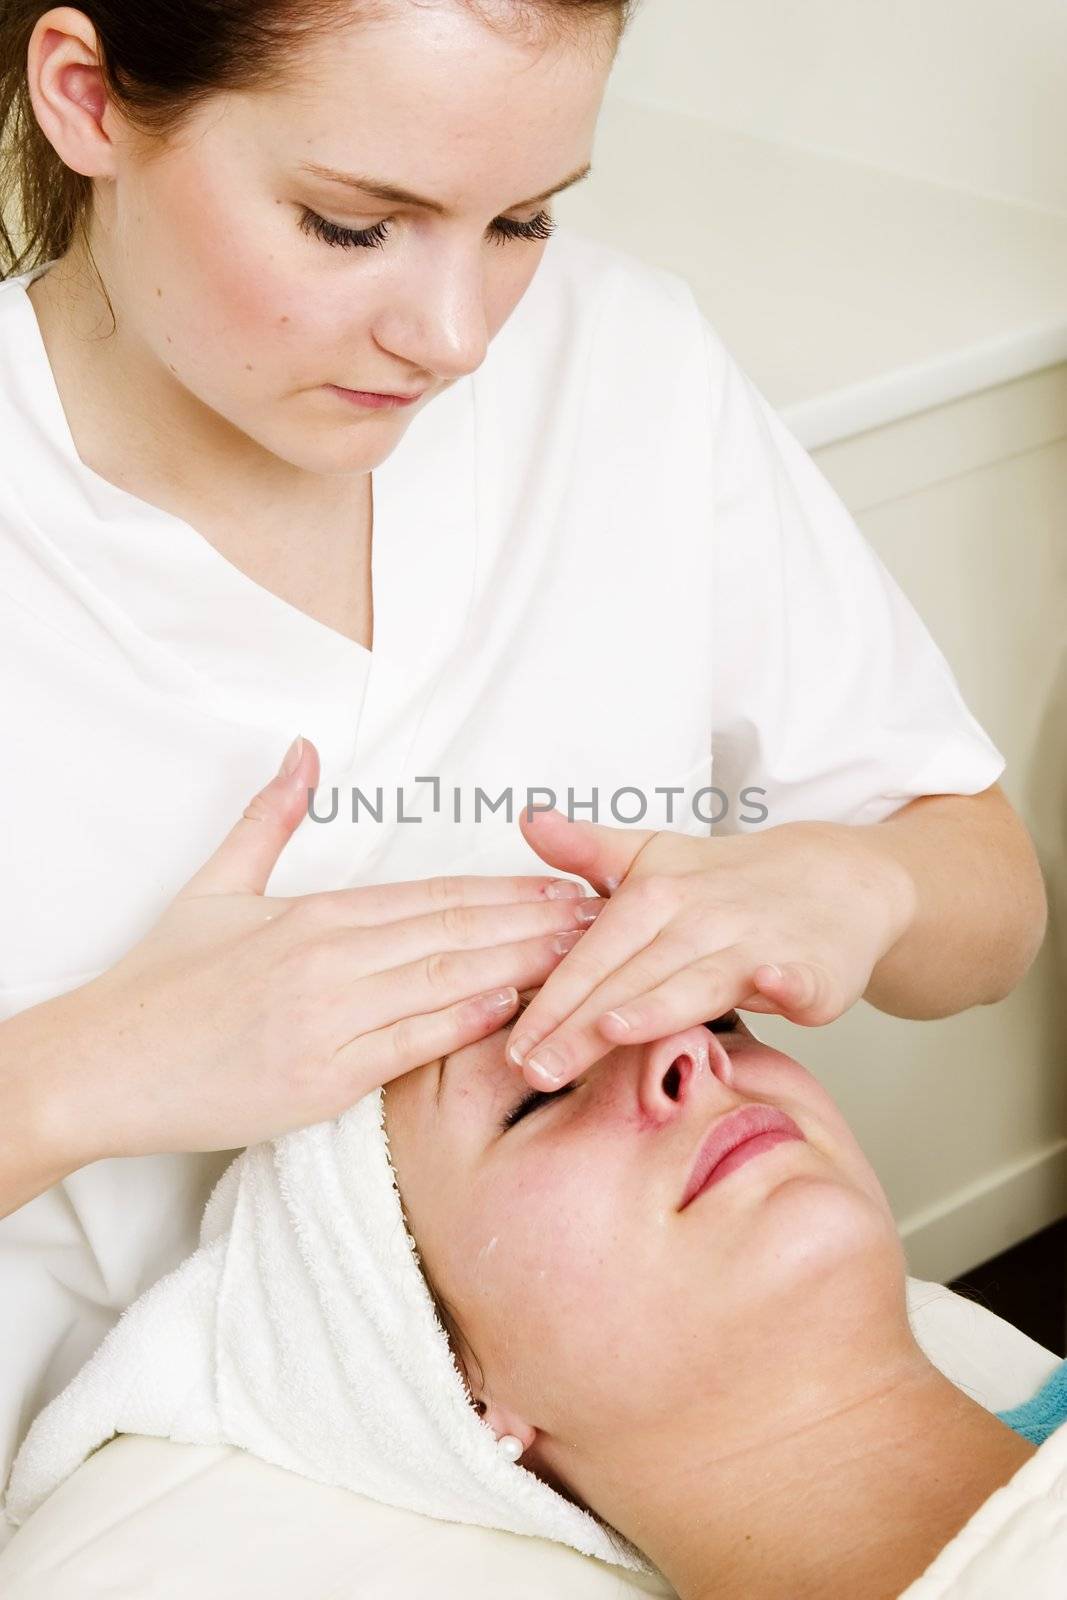 A woman receiving a facial massage at a beauty spa.